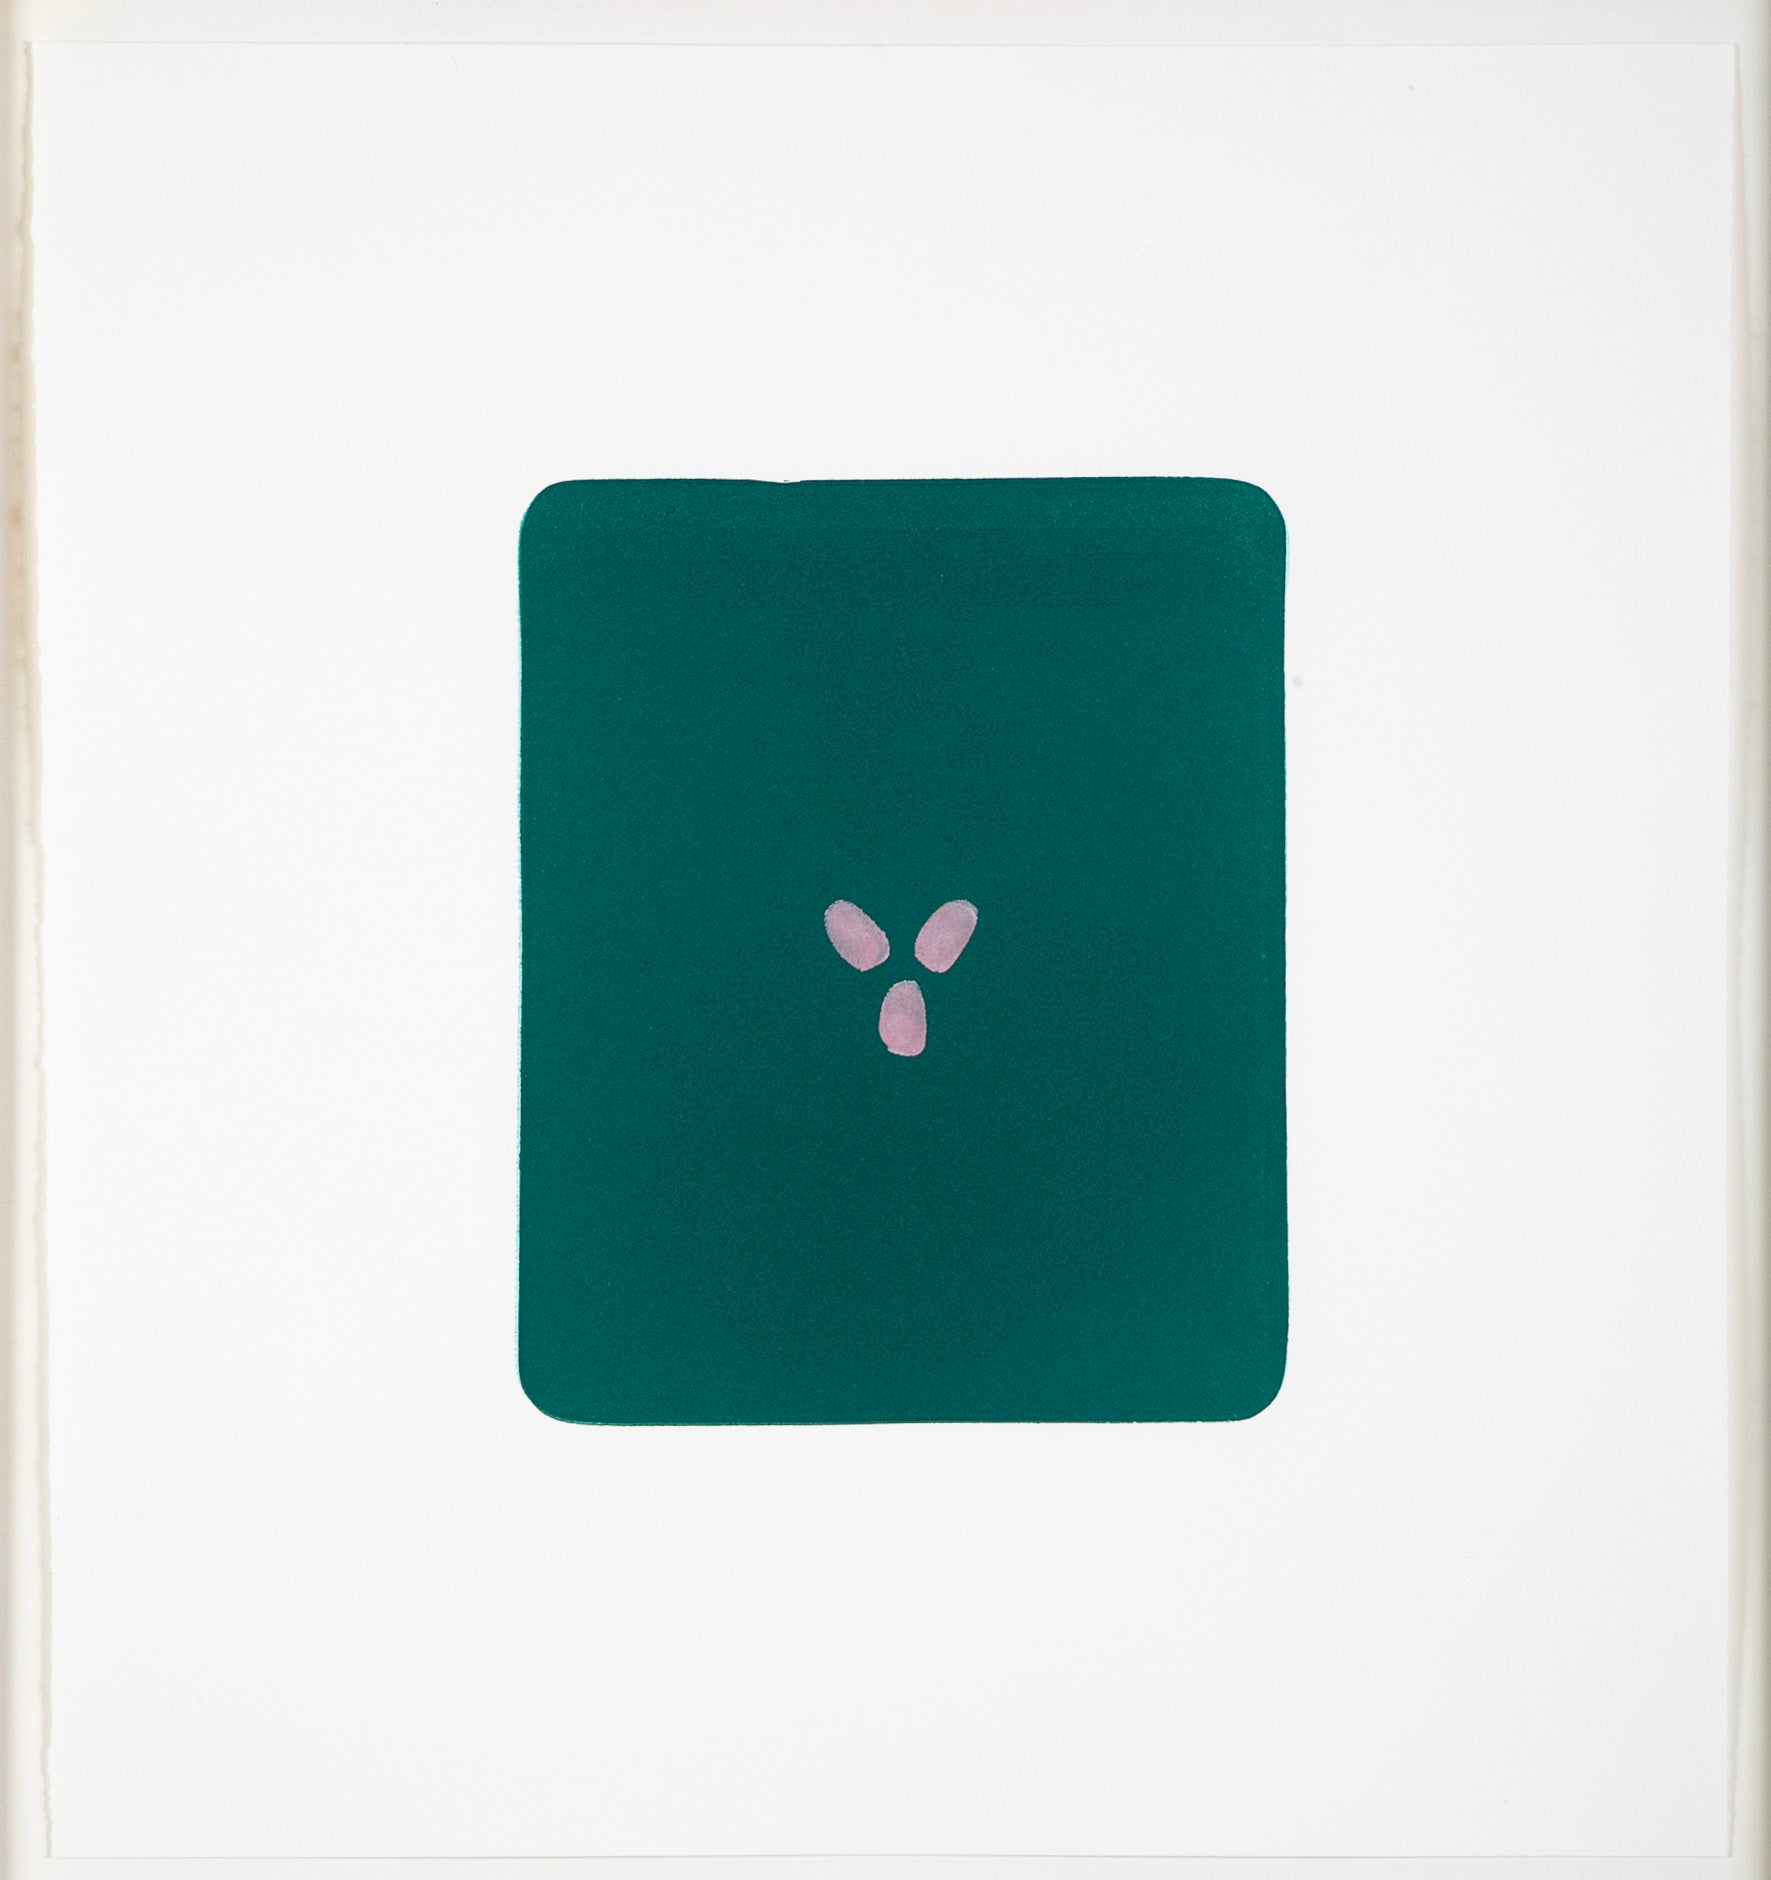 8 Lithographs From The "Fingerprint" Portfolio of Michael Kvium     Priced Individually